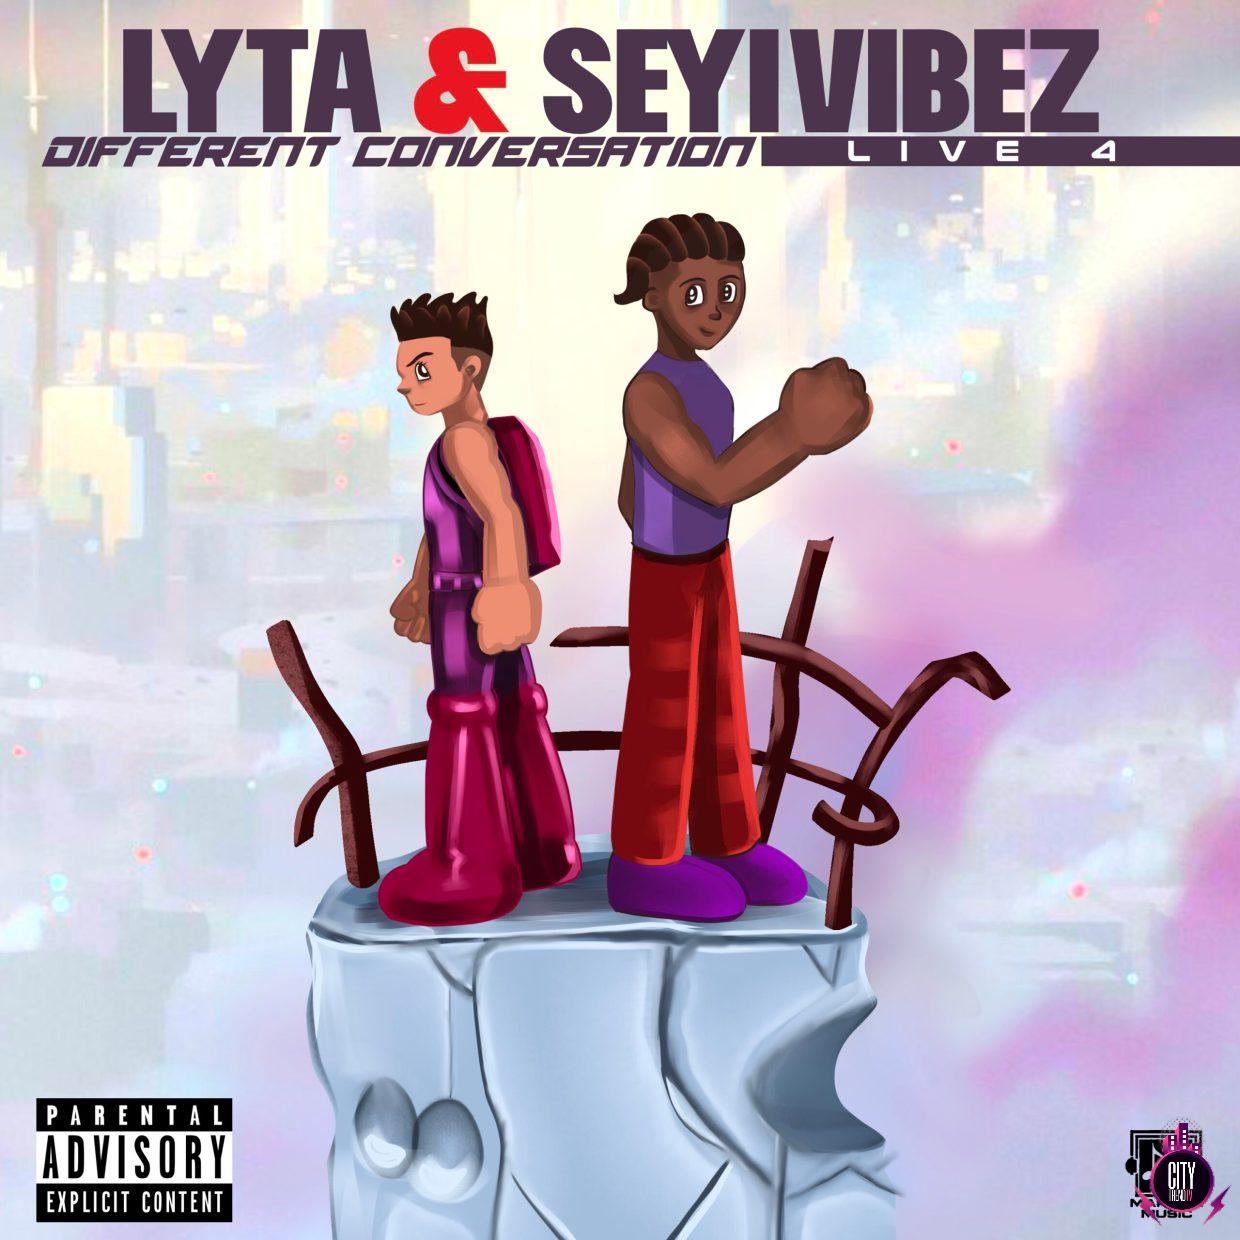 Lyta Seyi Vibez — Different Conversation